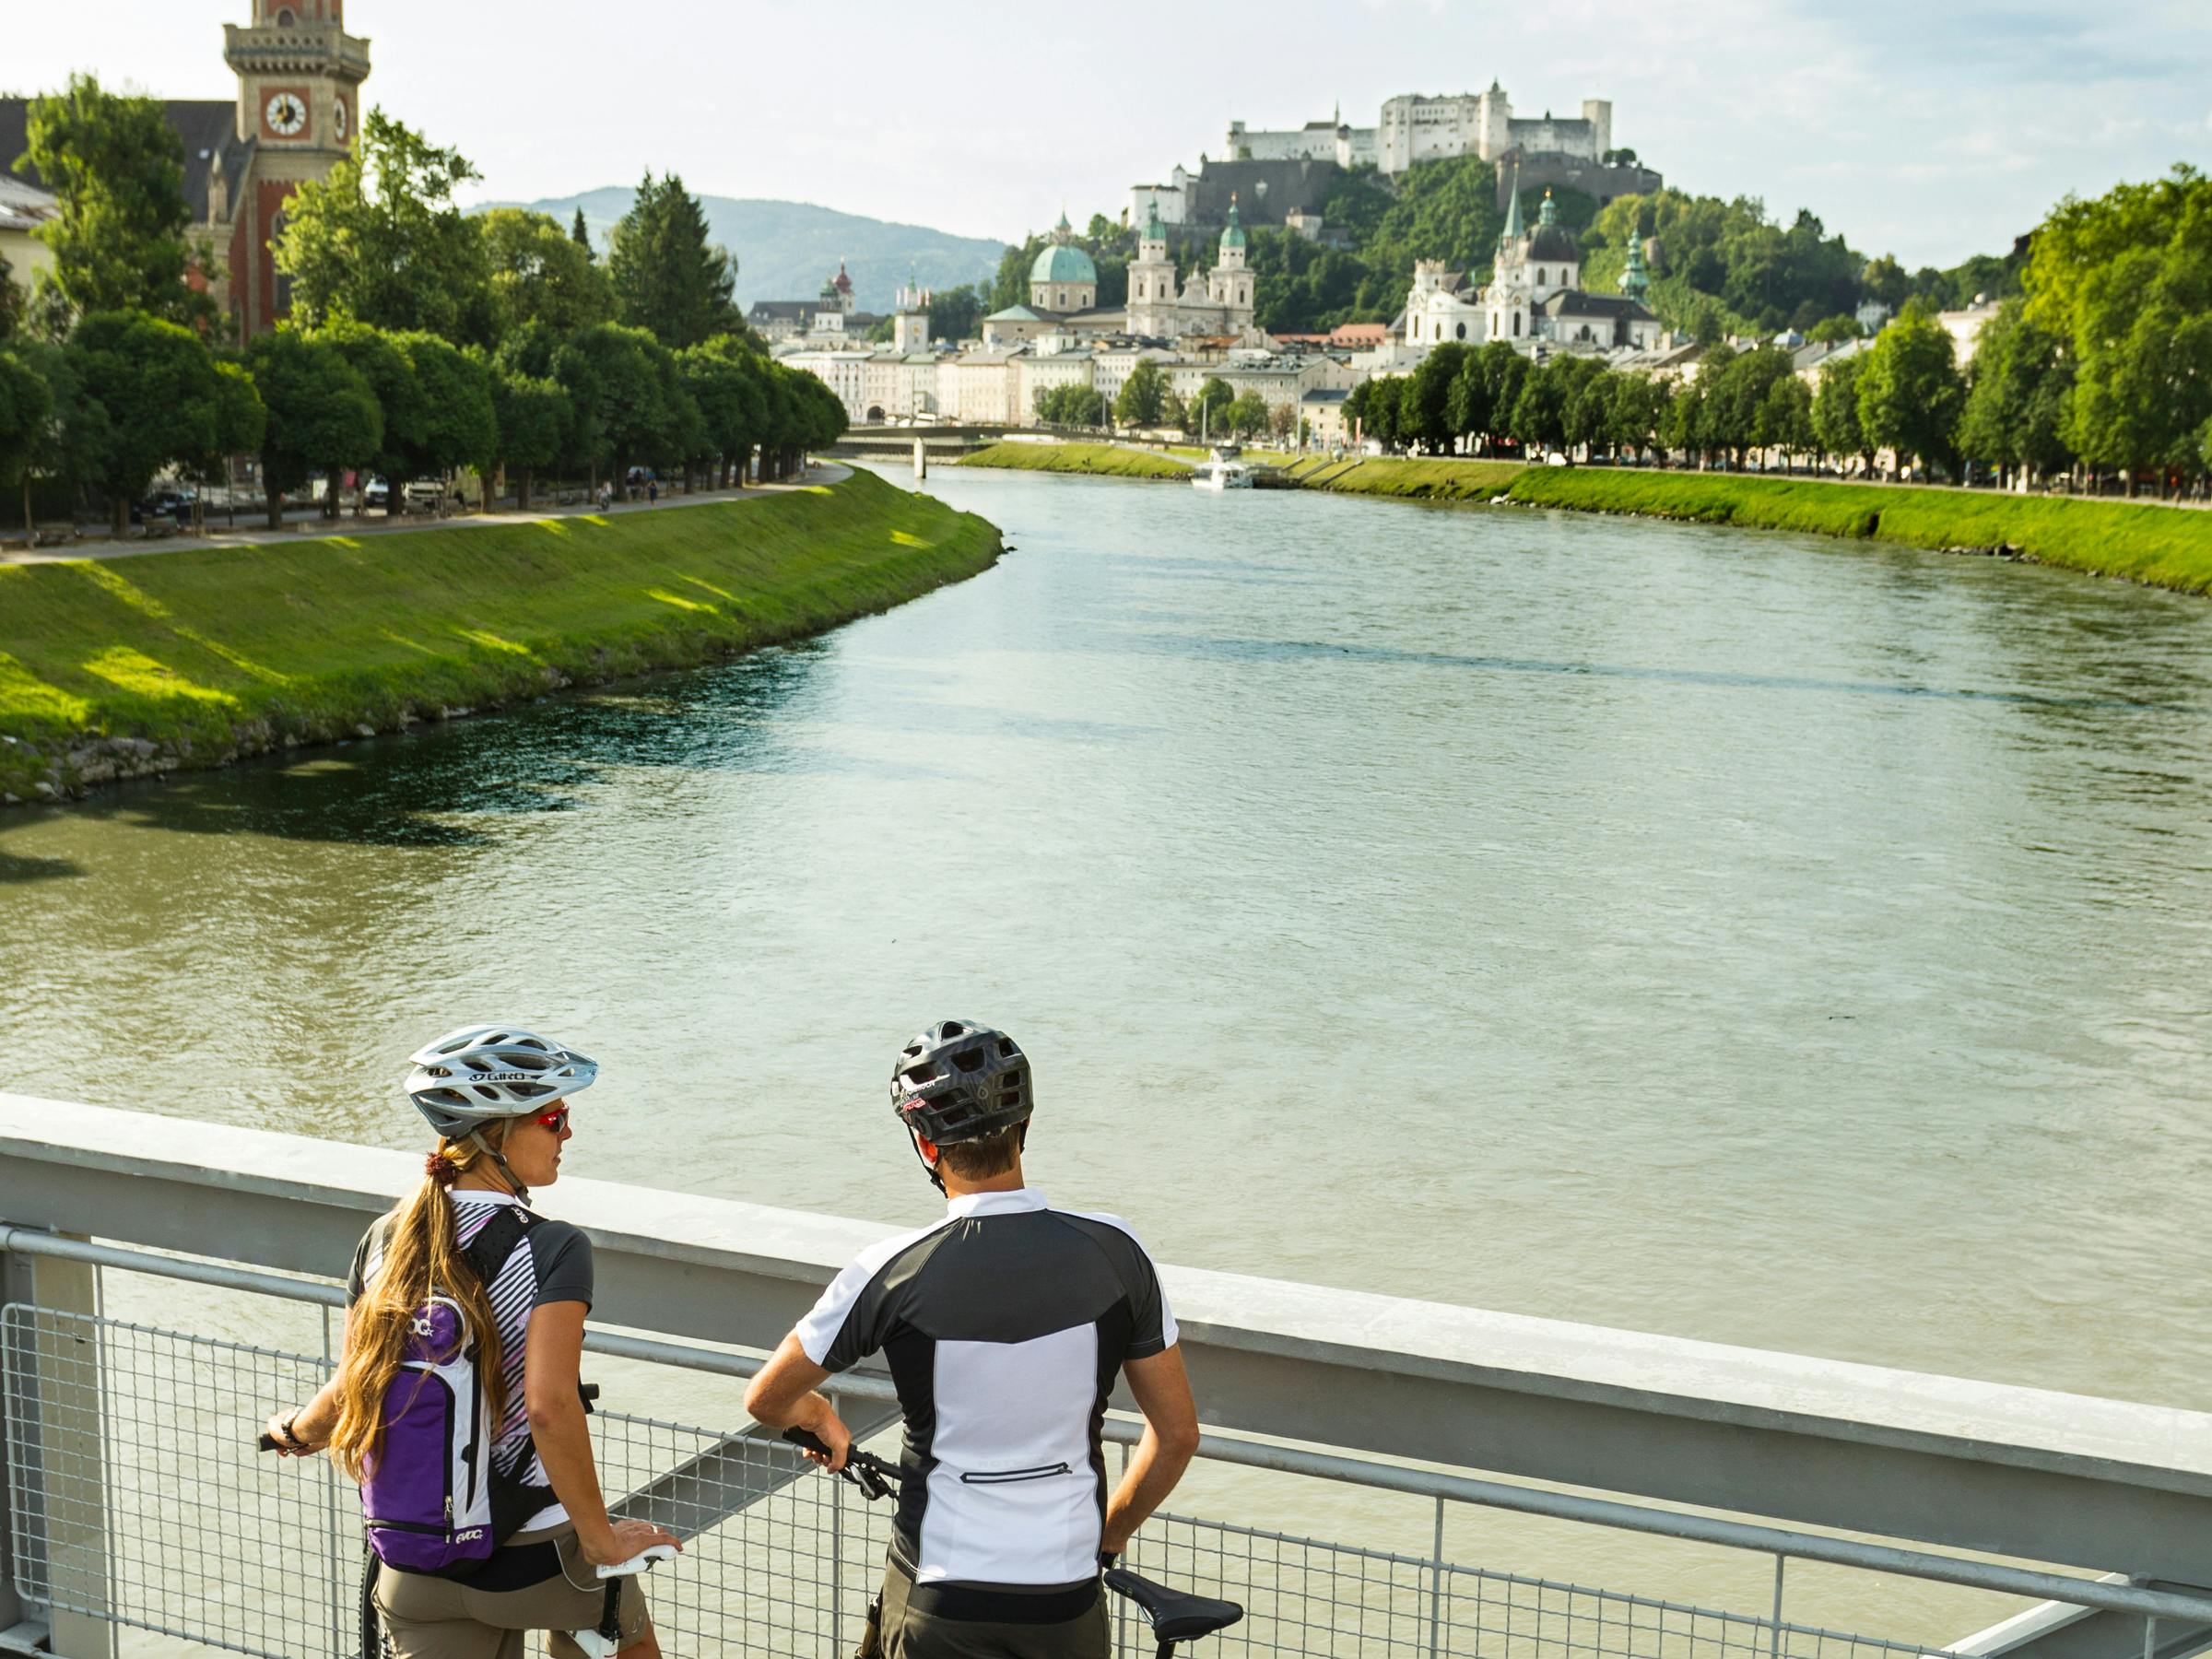 bicycle trips austria